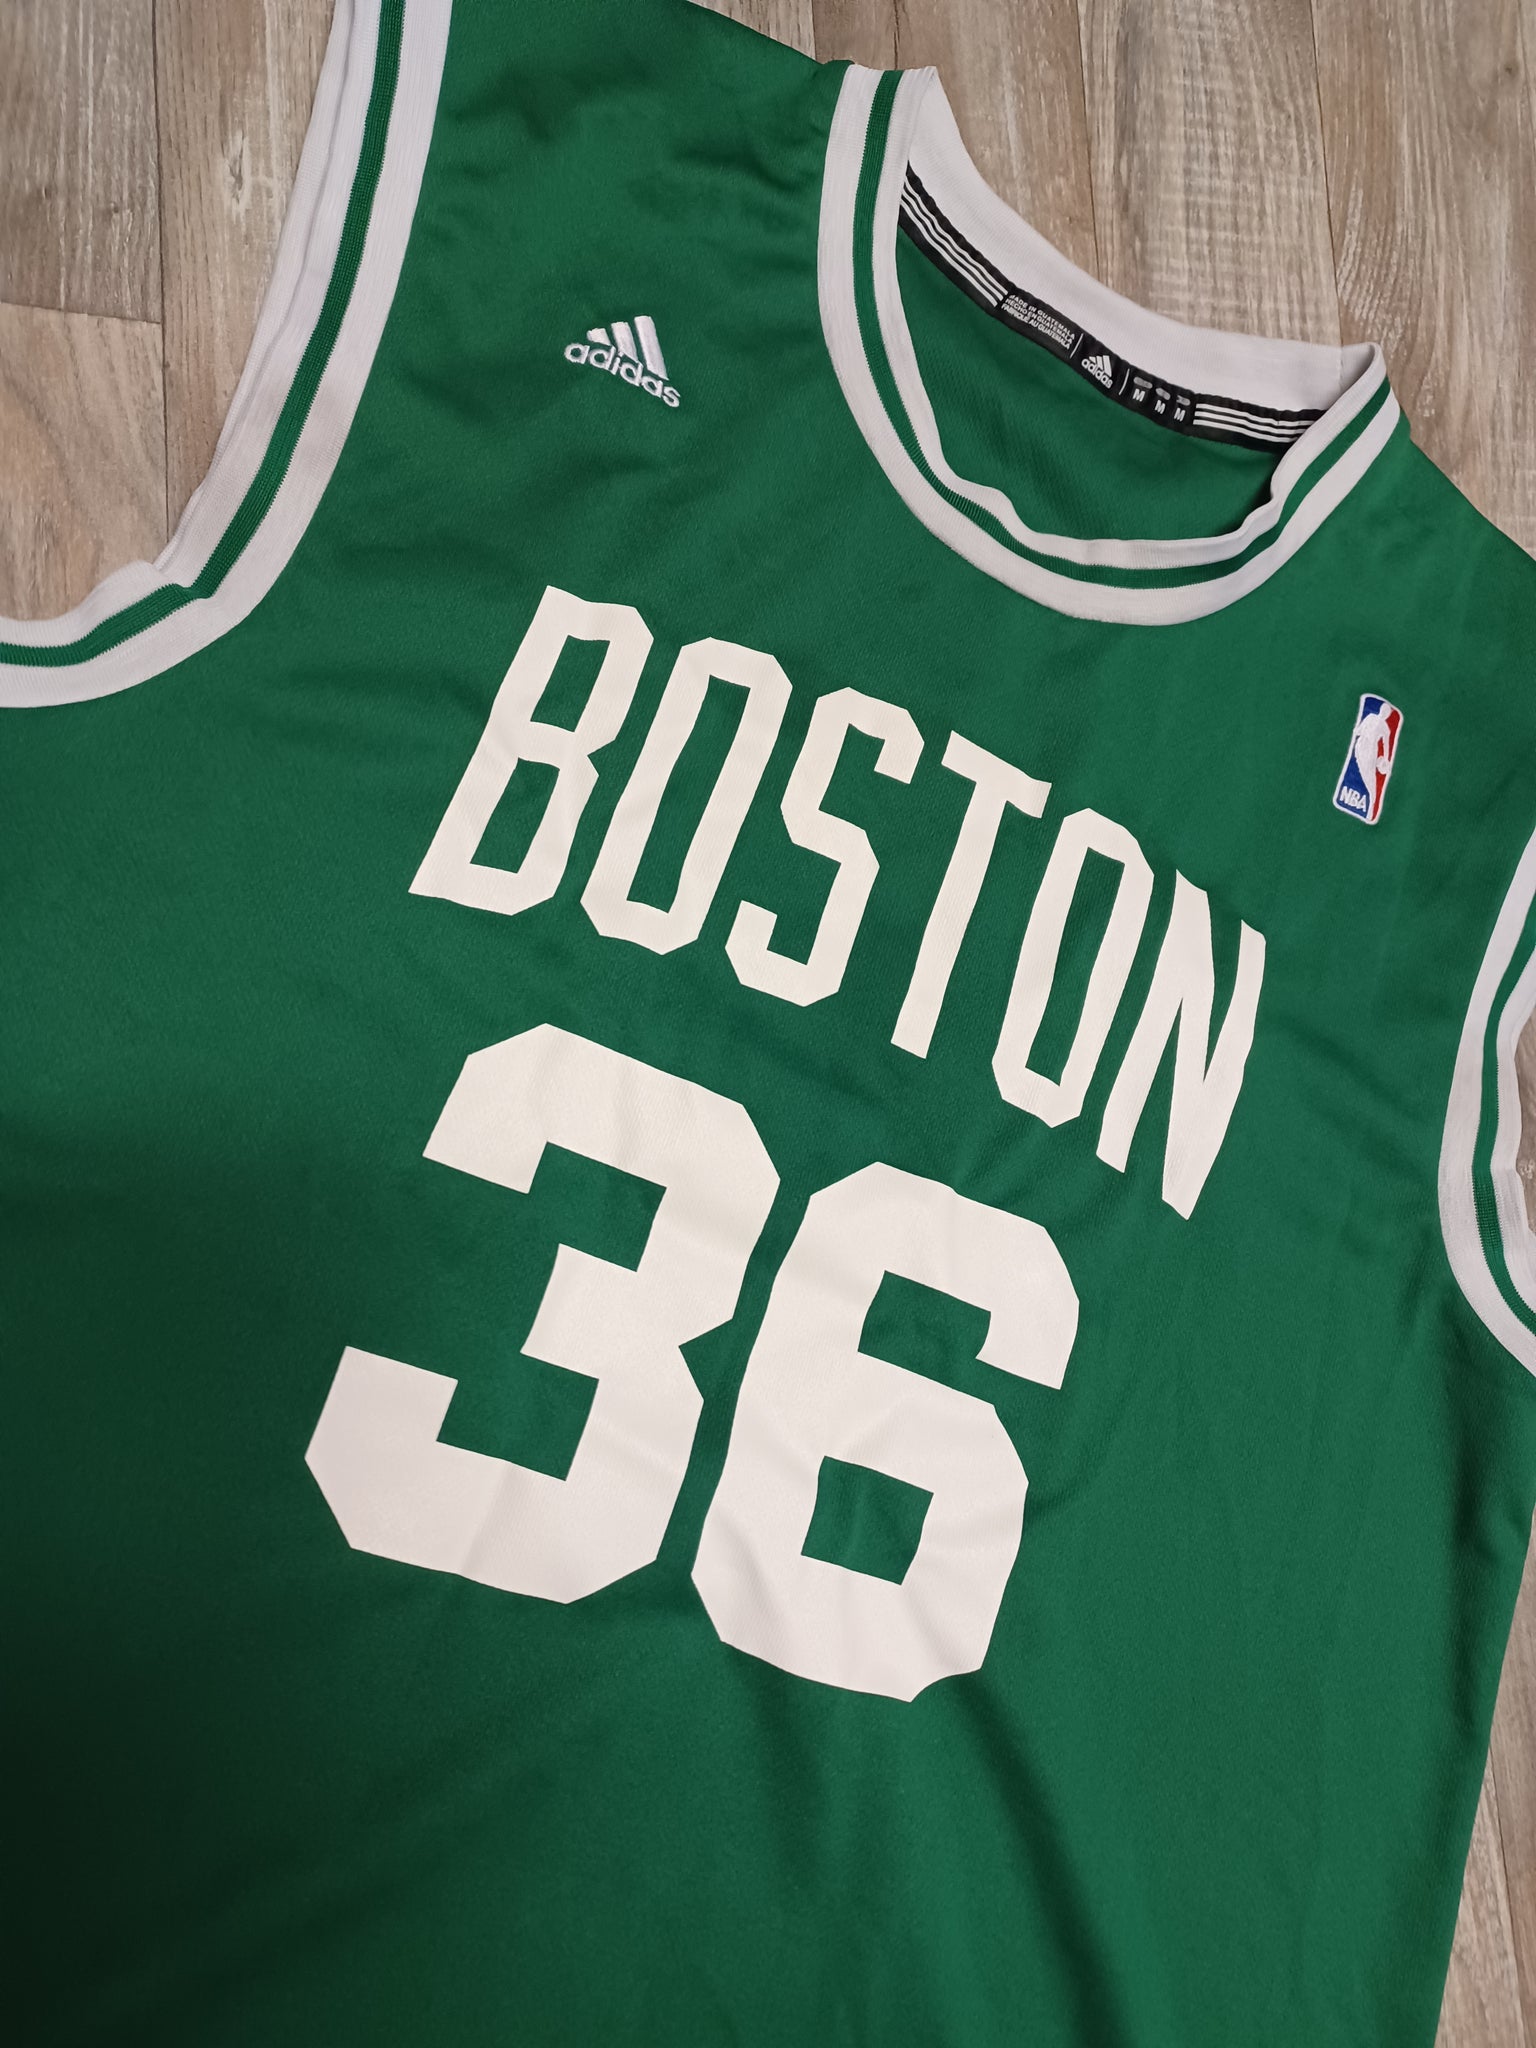 FREE shipping Marcus Smart Boston Celtics NBA shirt, Unisex tee